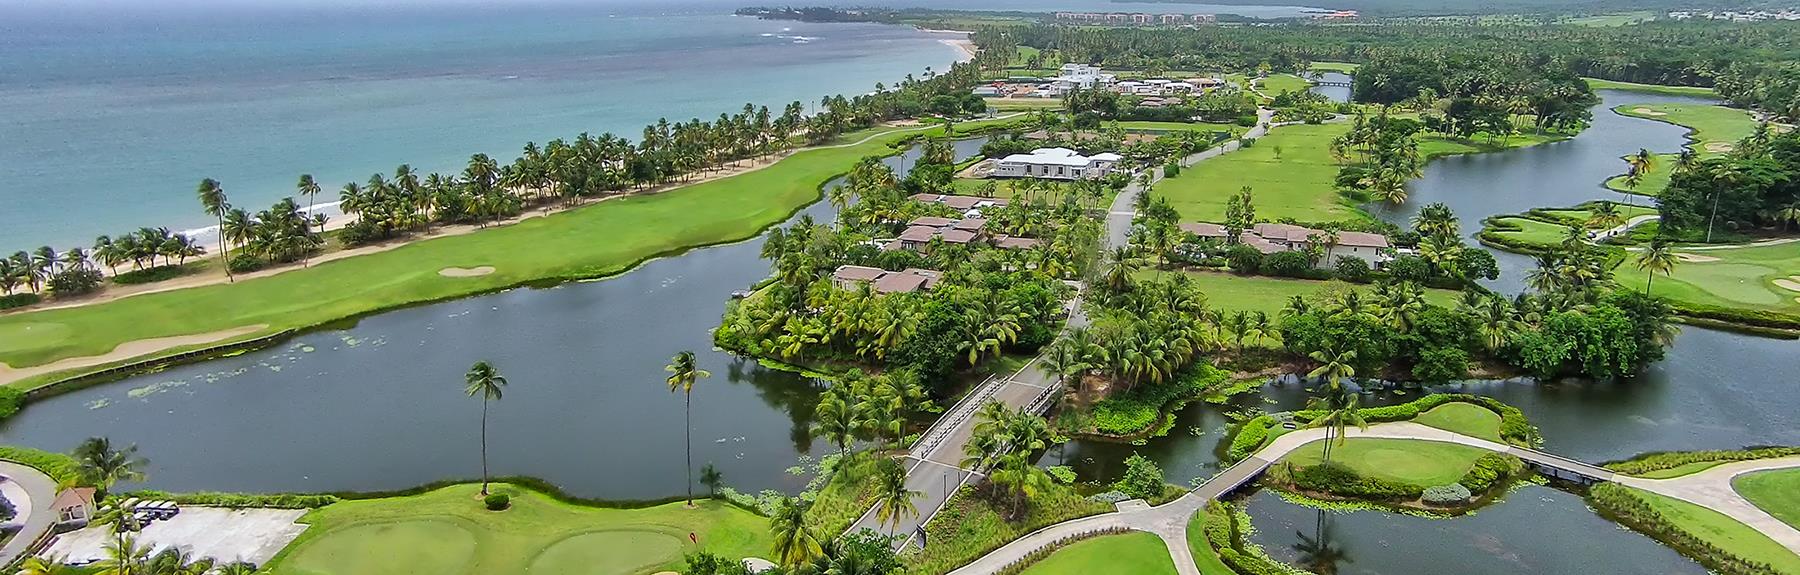 Golf Course Aerial - The St. Regis Bahia Beach Resort, Rio Grande, Puerto Rico